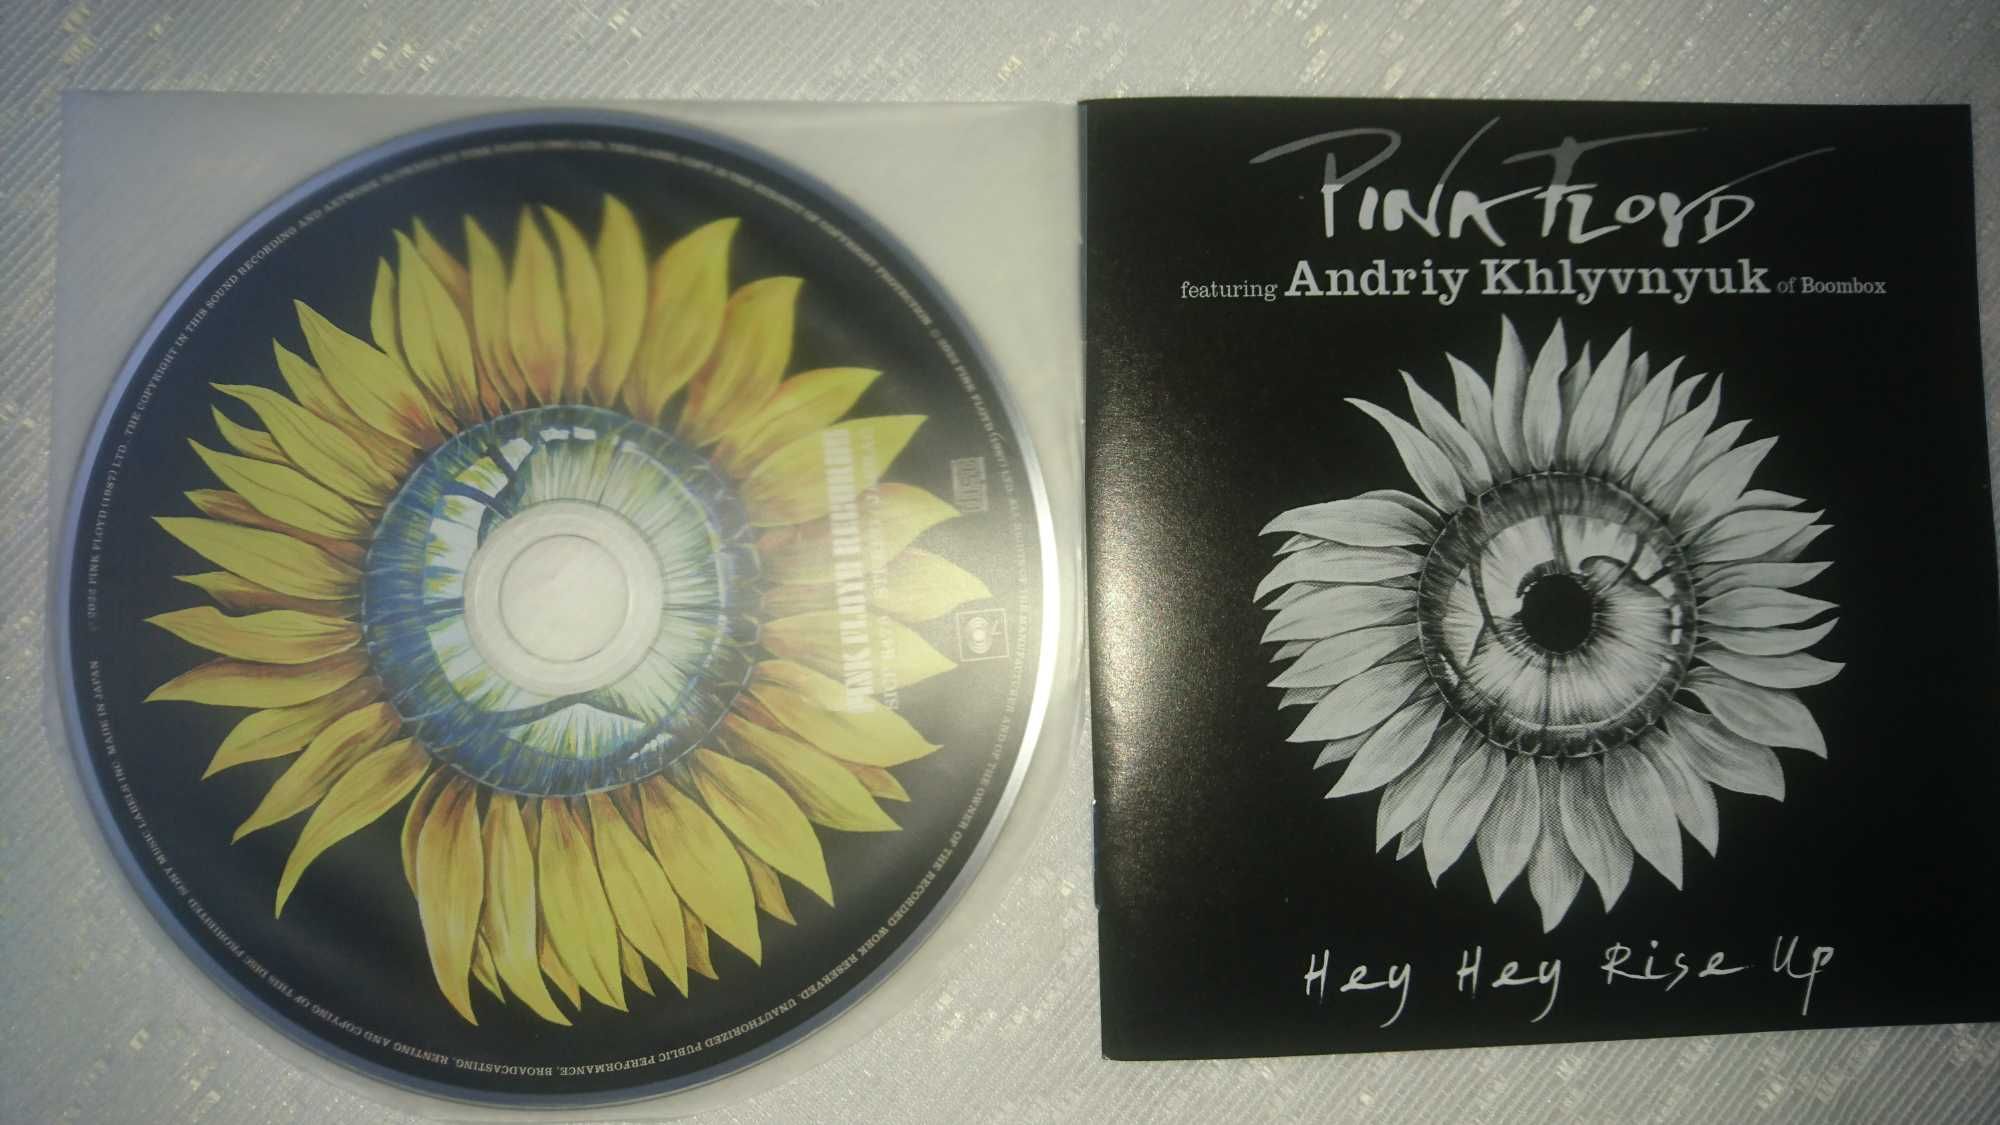 Japan CD: Pink Floyd Andriy Khlyvnyuk Hey Hey Rise Up